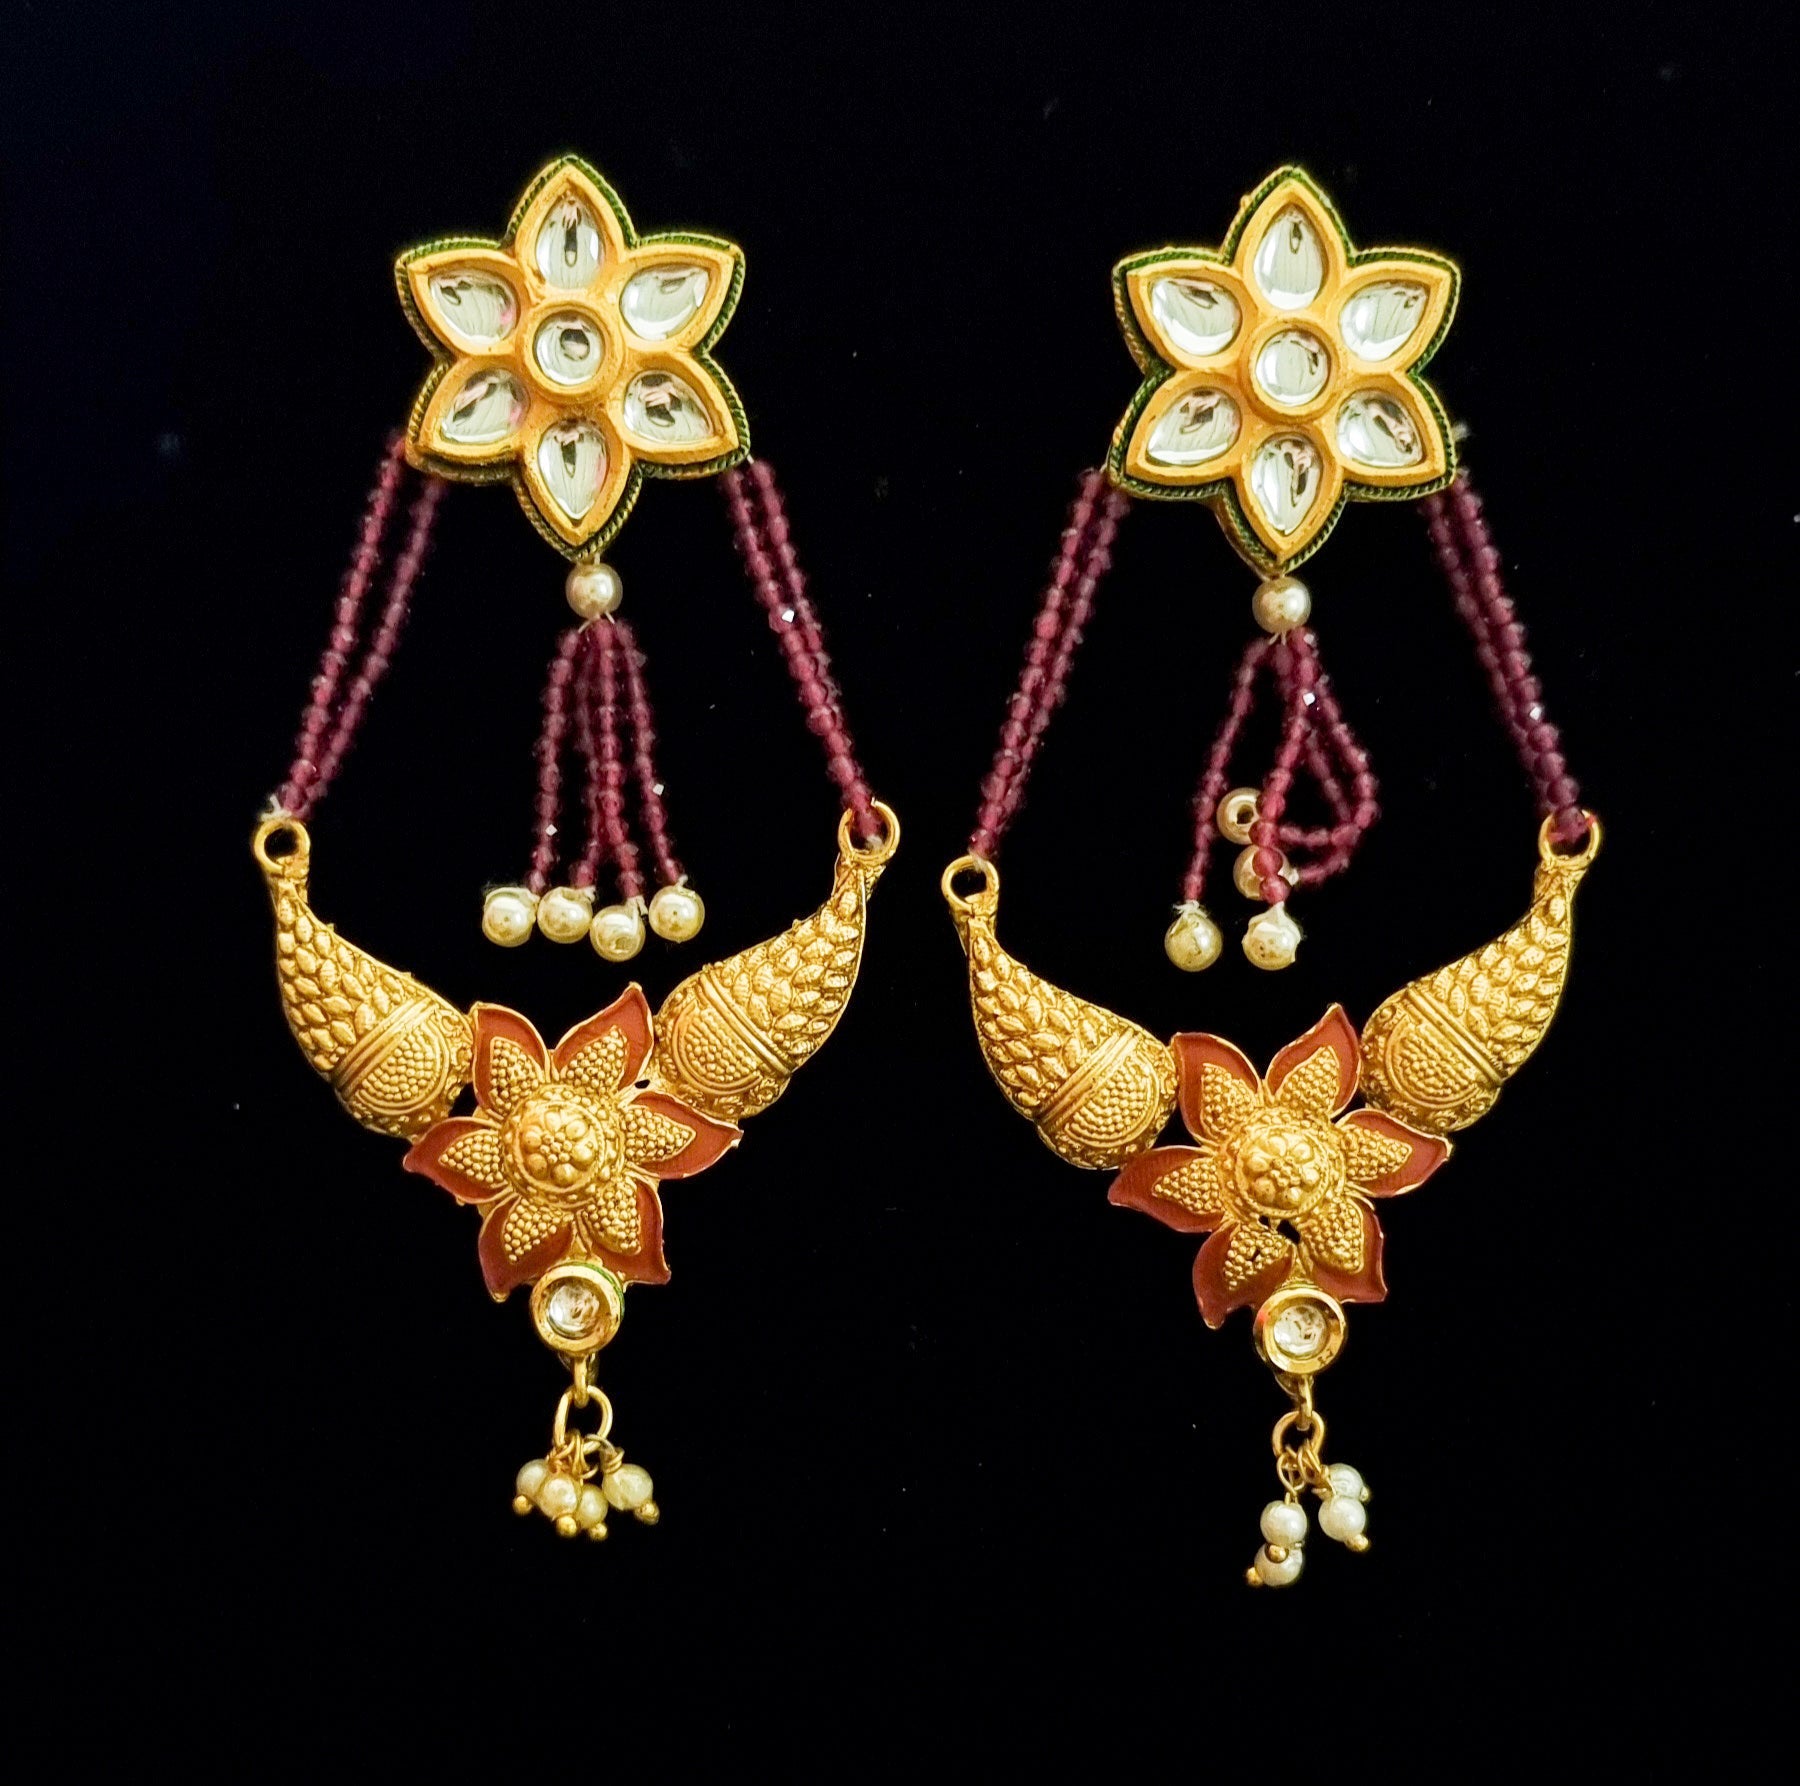 Kundan gold plated jhumar style earrings.